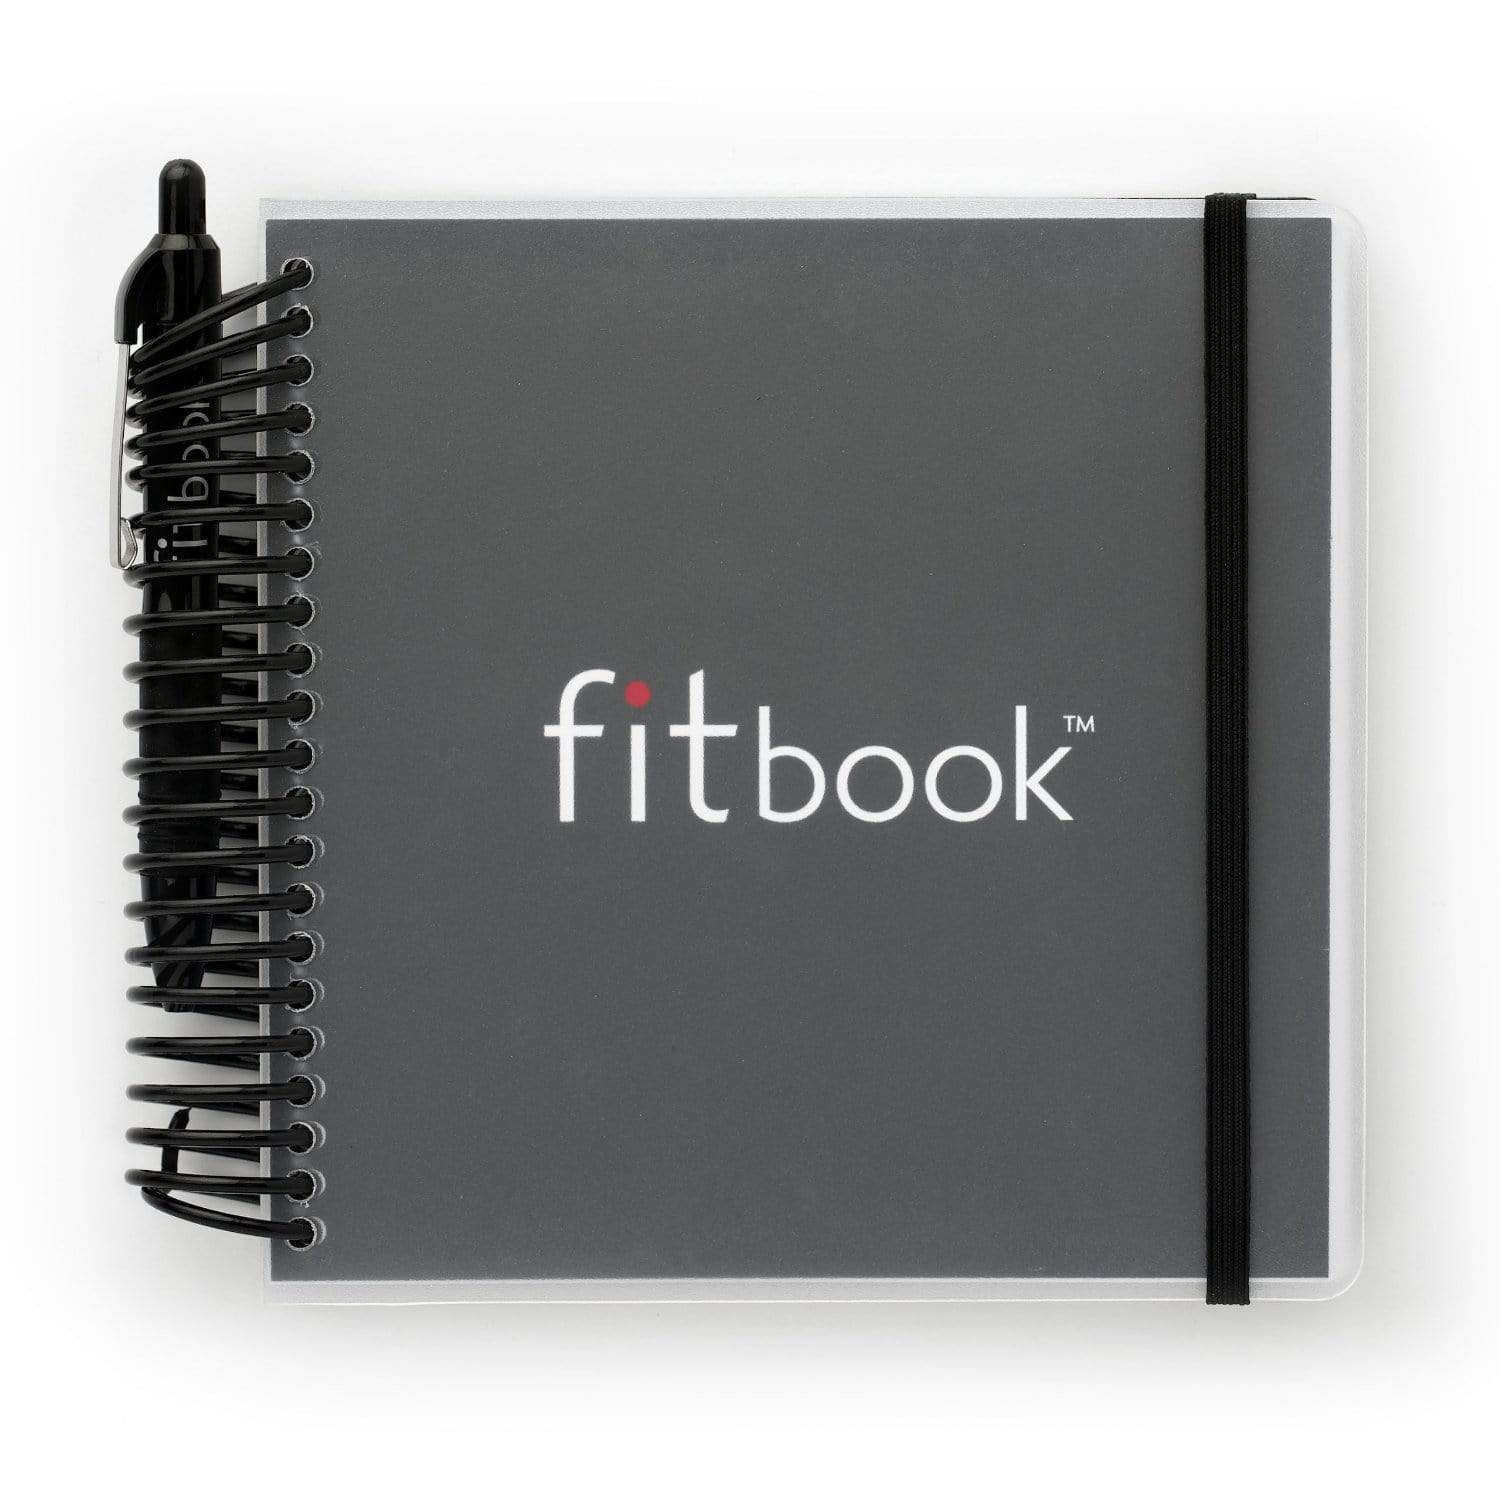 Fitbook - Fitbook -   15 fitness Journal rewards ideas